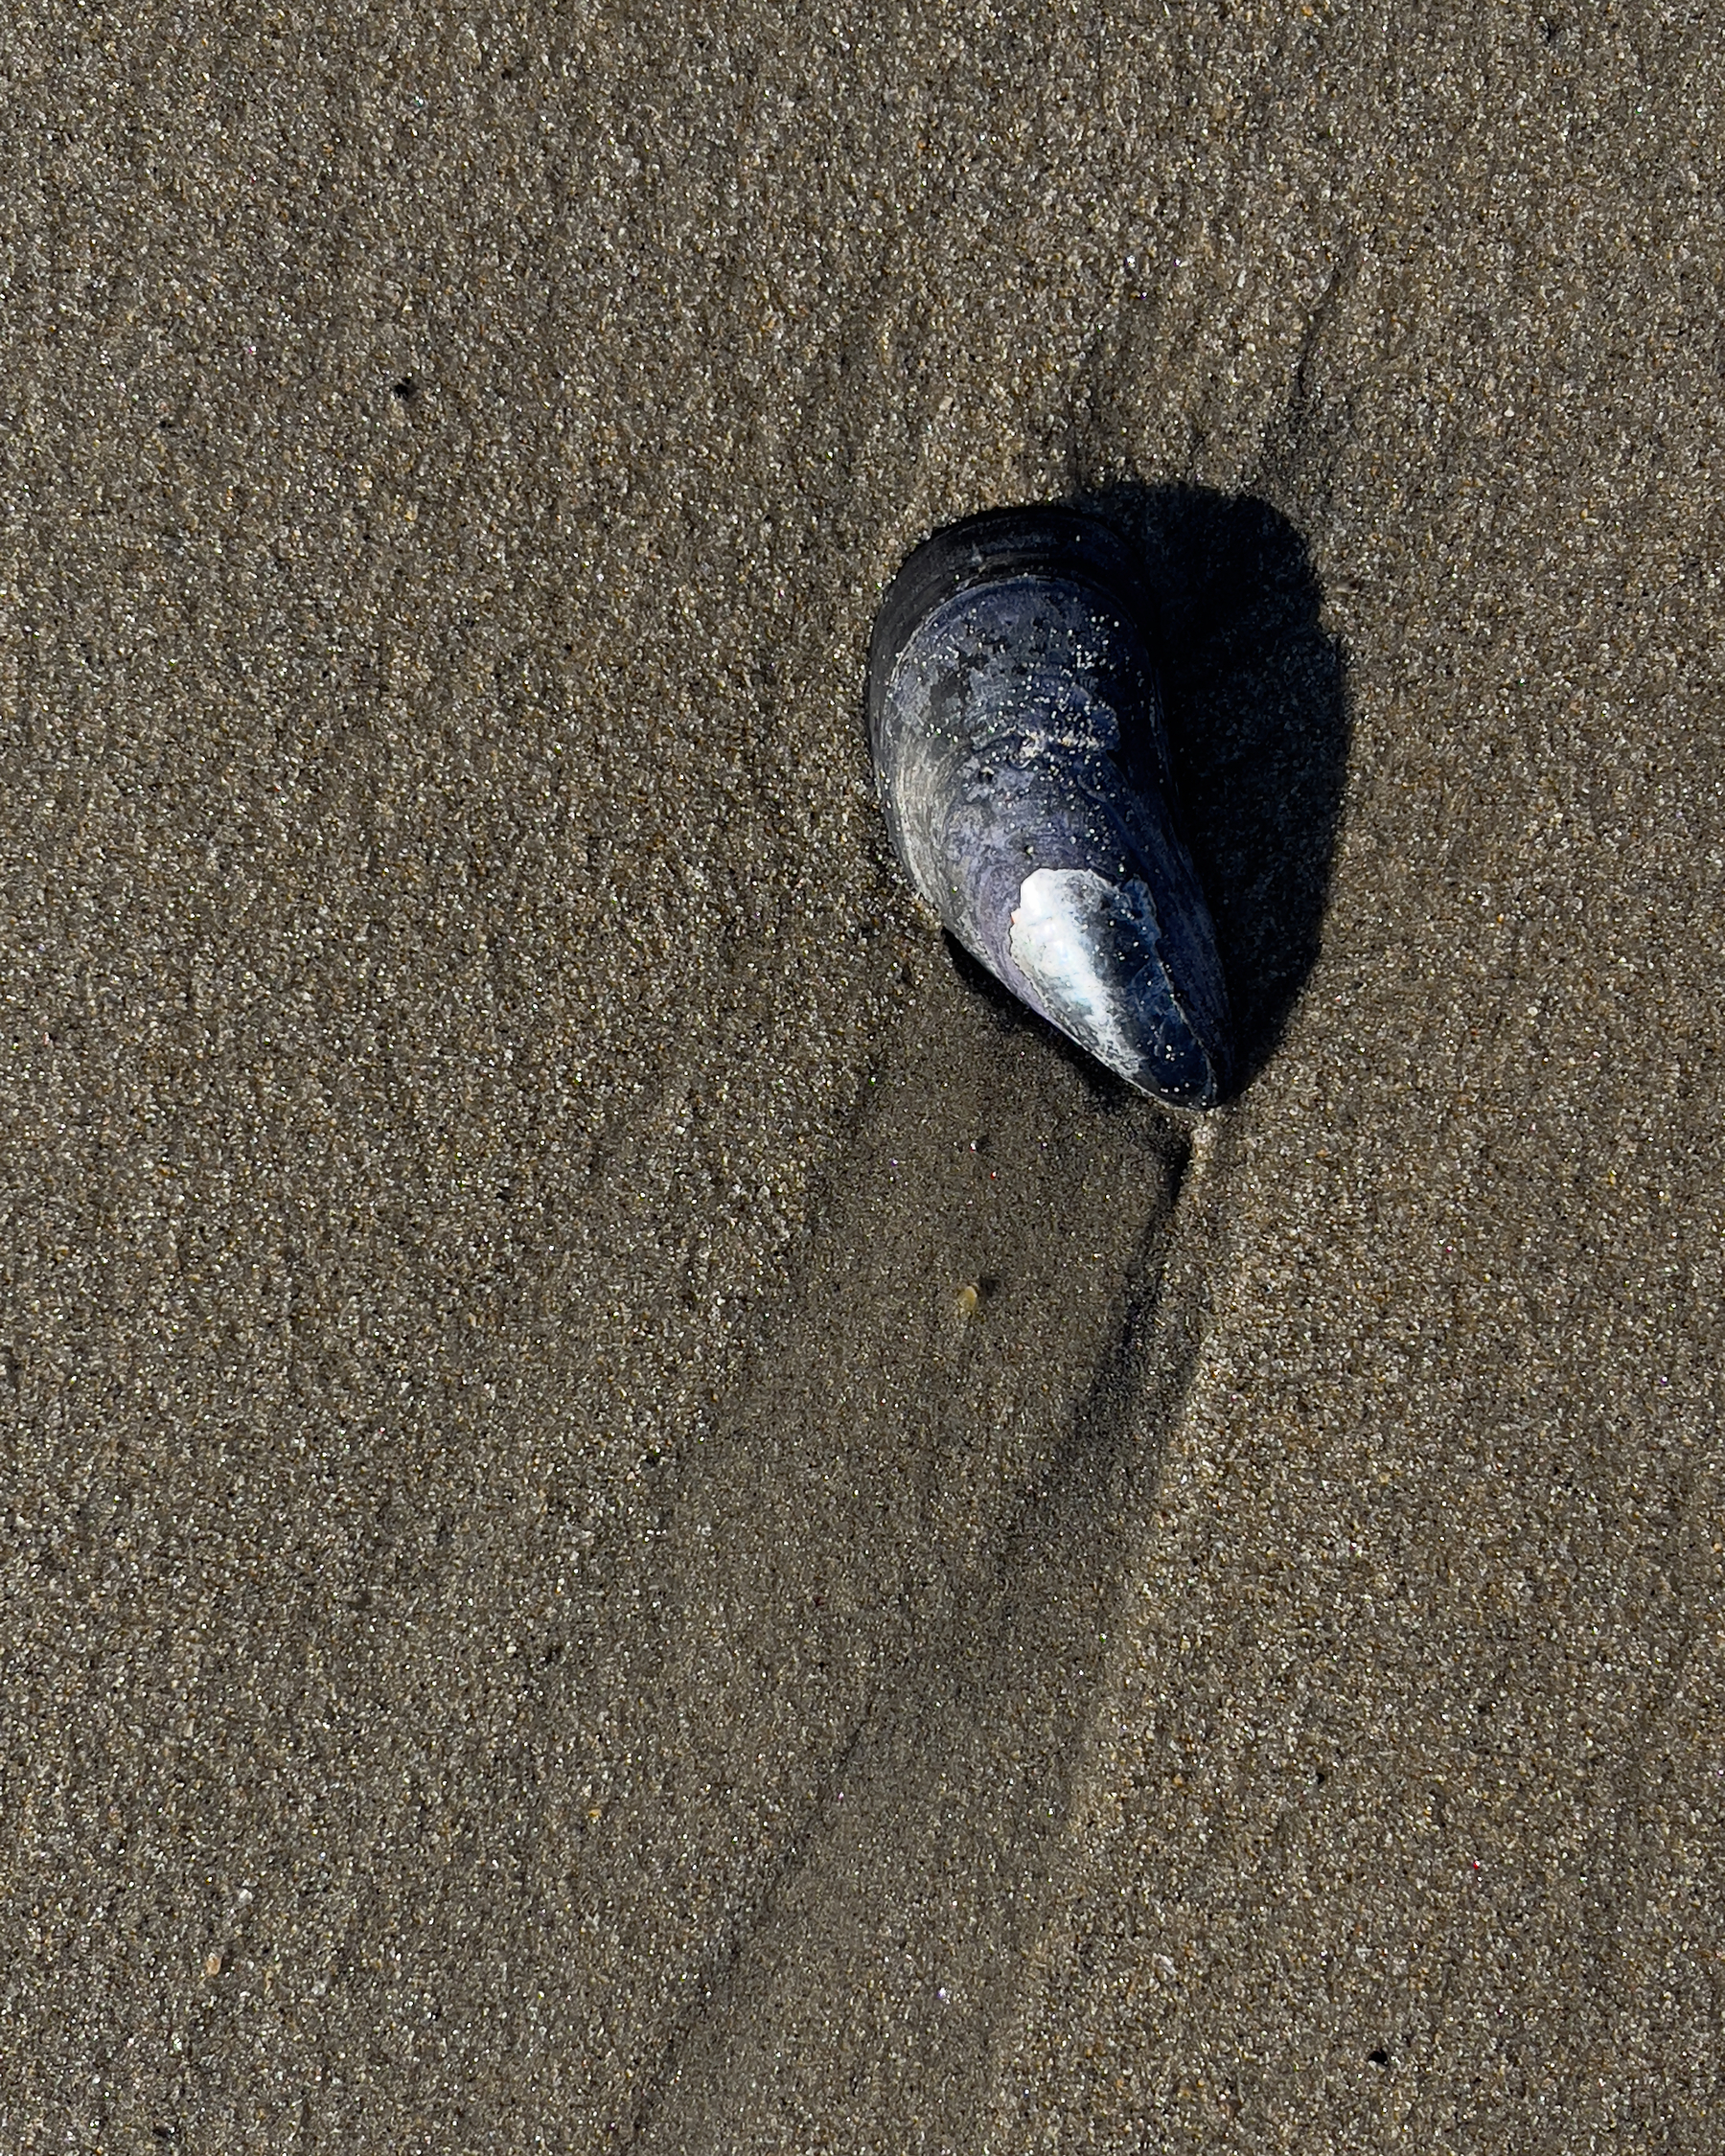 Mussel shell, sand, erosion.